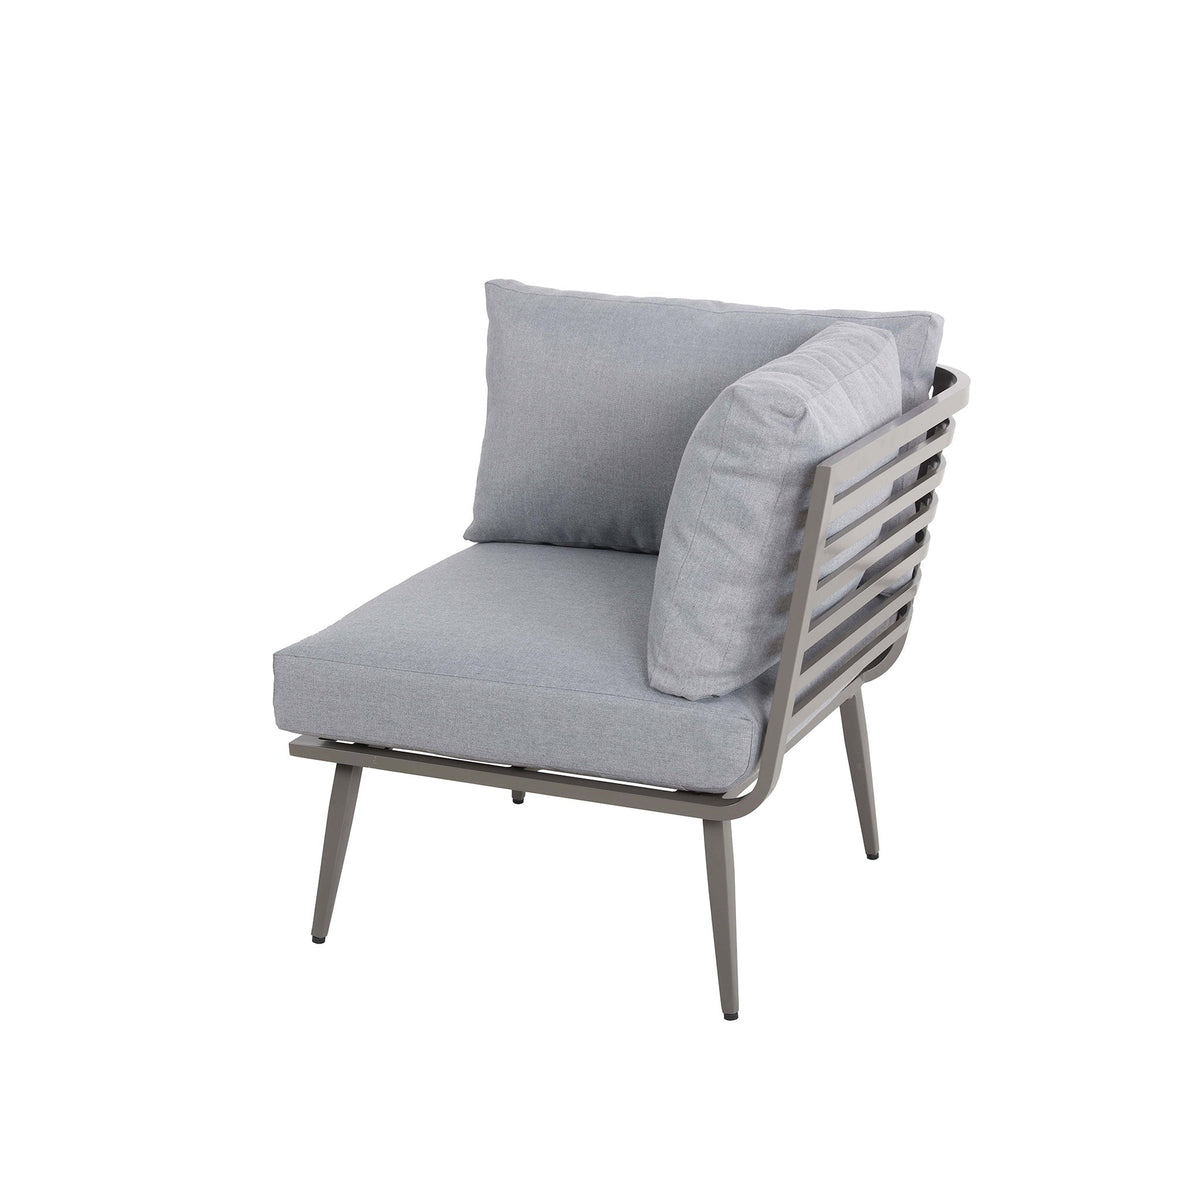 Mayfair 150cm Grey Outdoor Corner Fire Pit Table Lounge Set Corner Seat